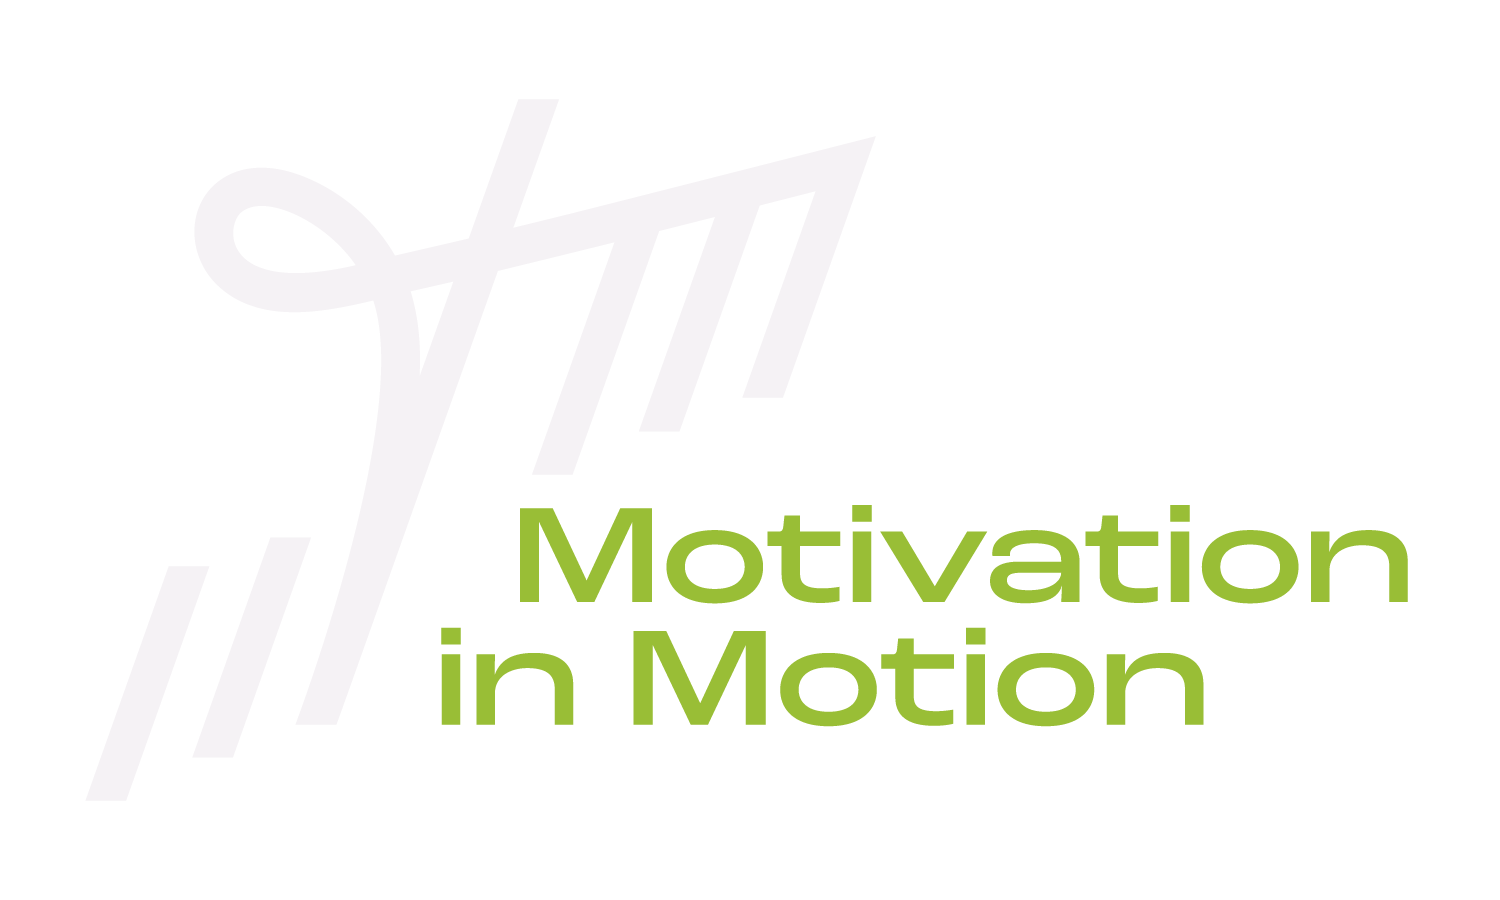 Motivation in Motion